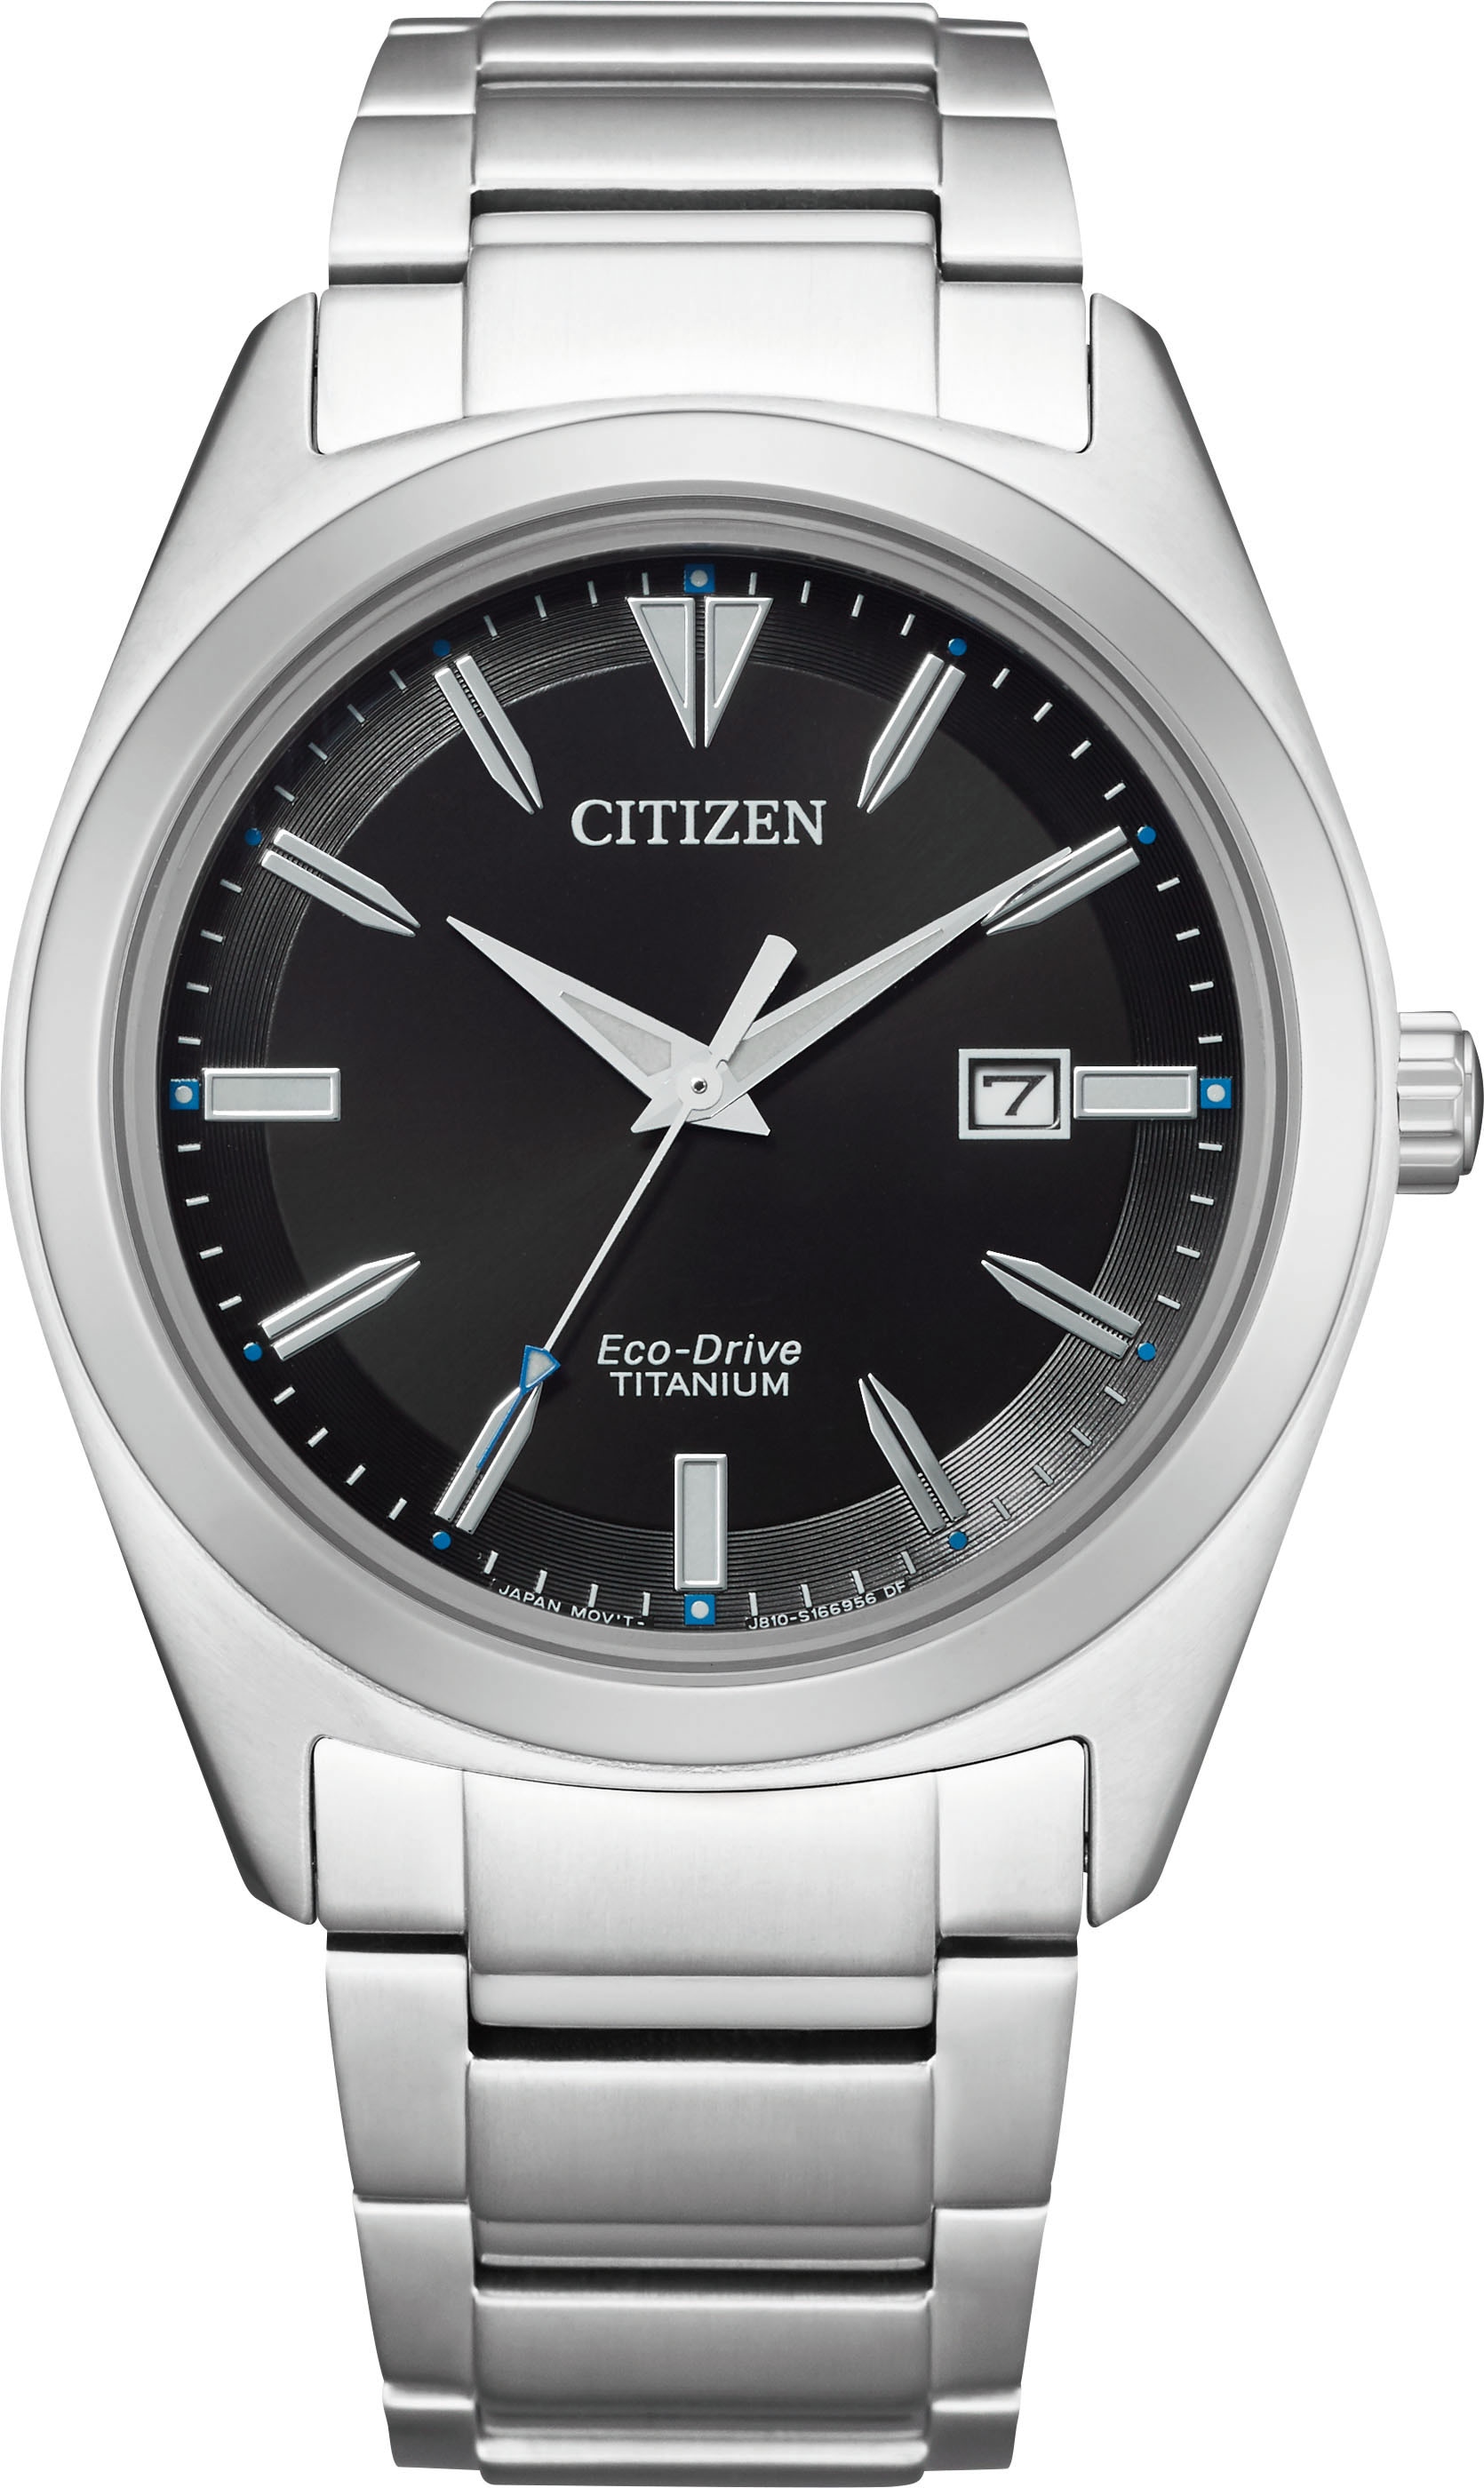 Titanium Citizen »Super AW1640-83E« Chronograph